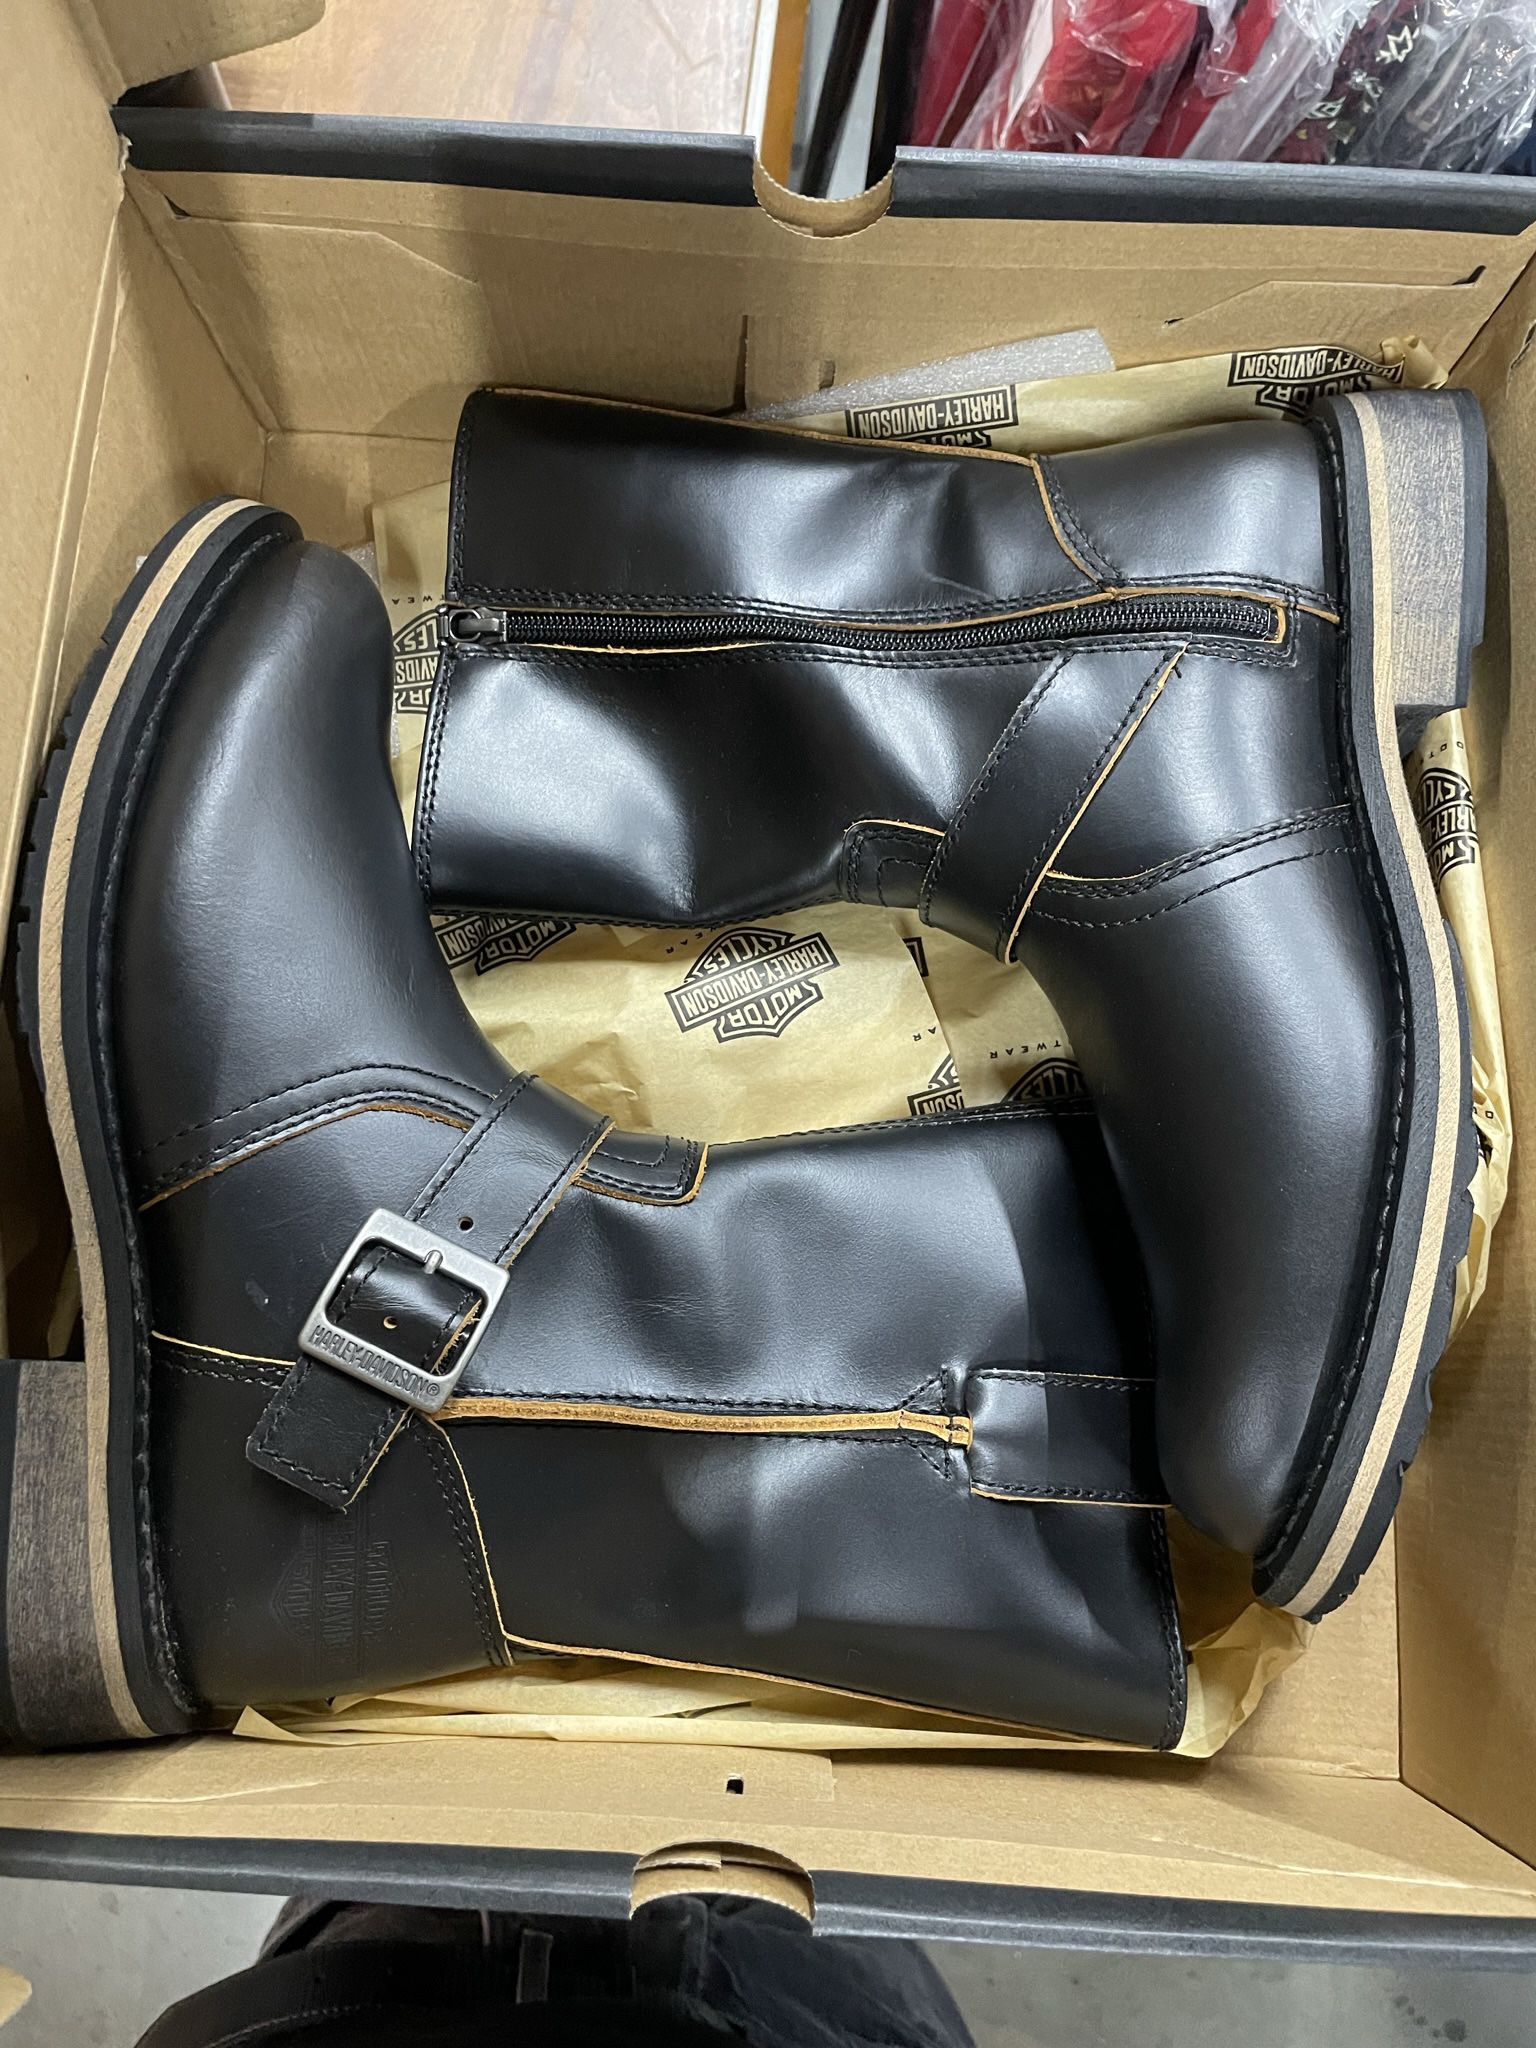 Harley Davidson Boots Size 7-7.5 & 9